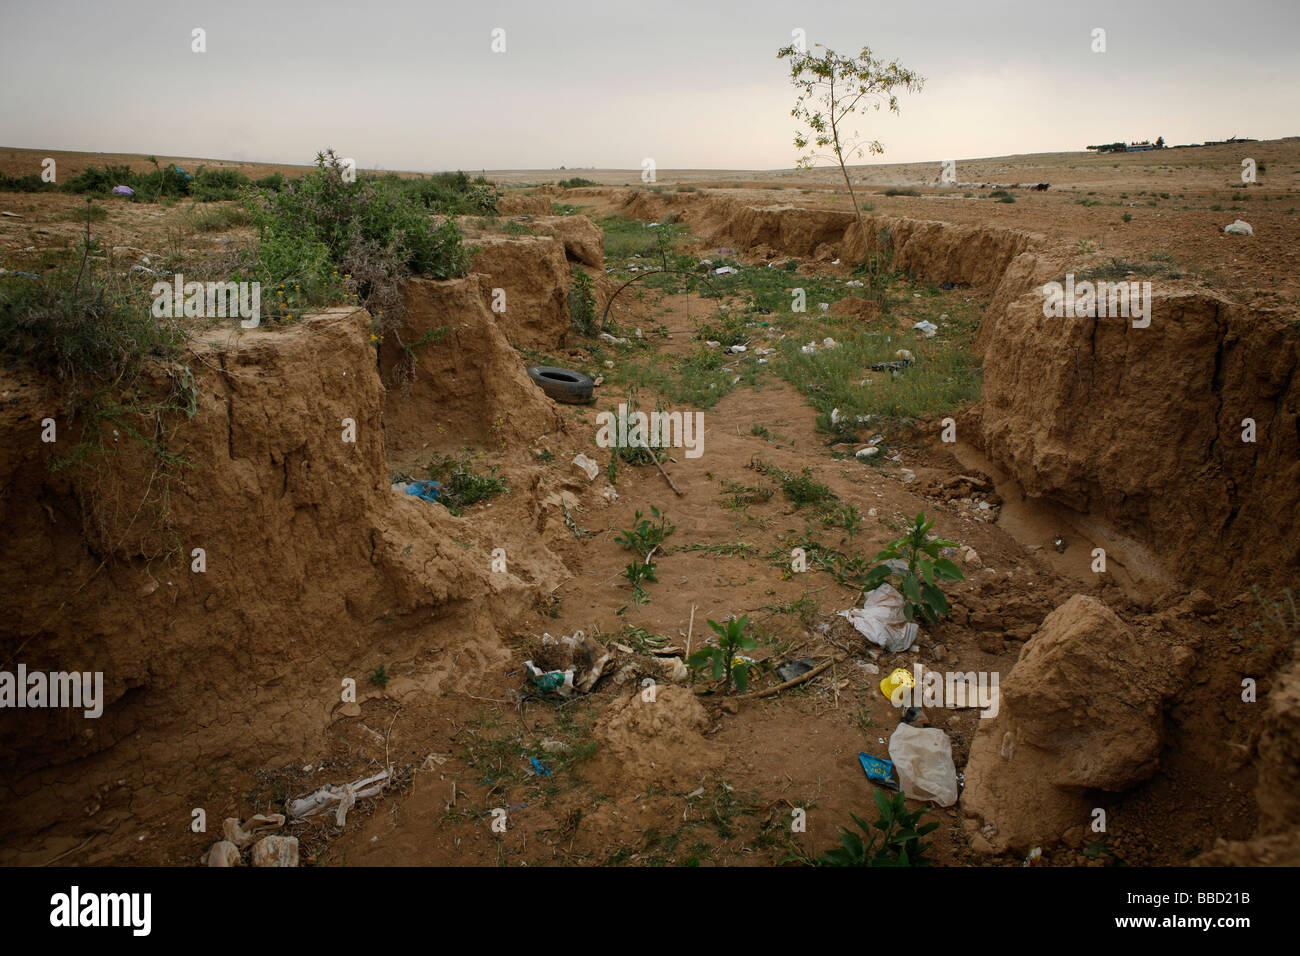 Rubbish discarded in Wadi ' Nam. Negev desert, Israel. Stock Photo